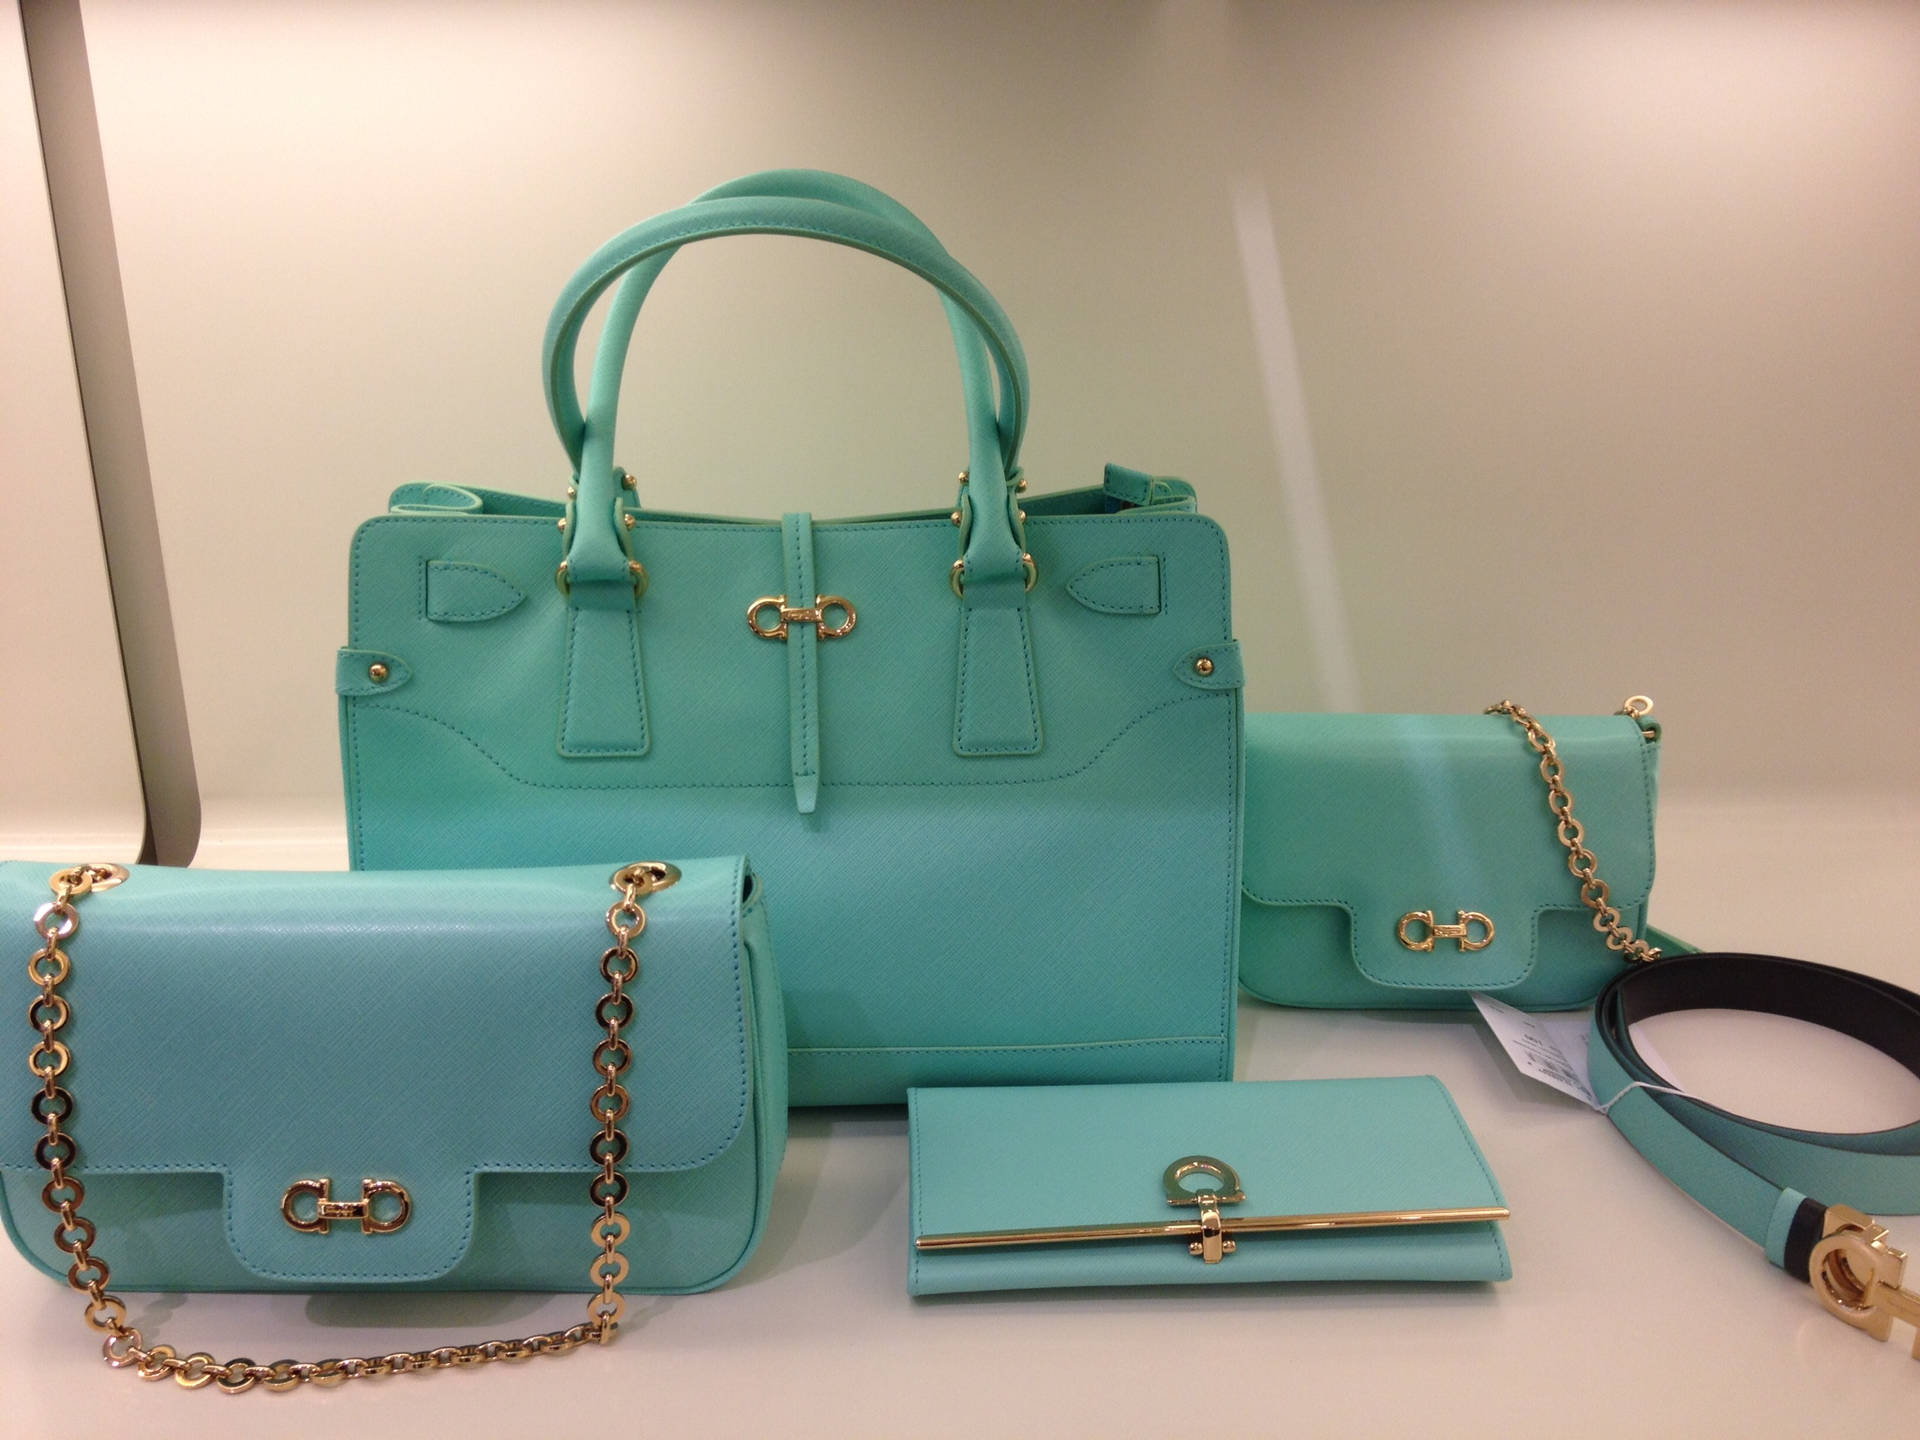 Salvatore Ferragamo Turquoise Bag Set Showcasing Elegance And Luxury Background